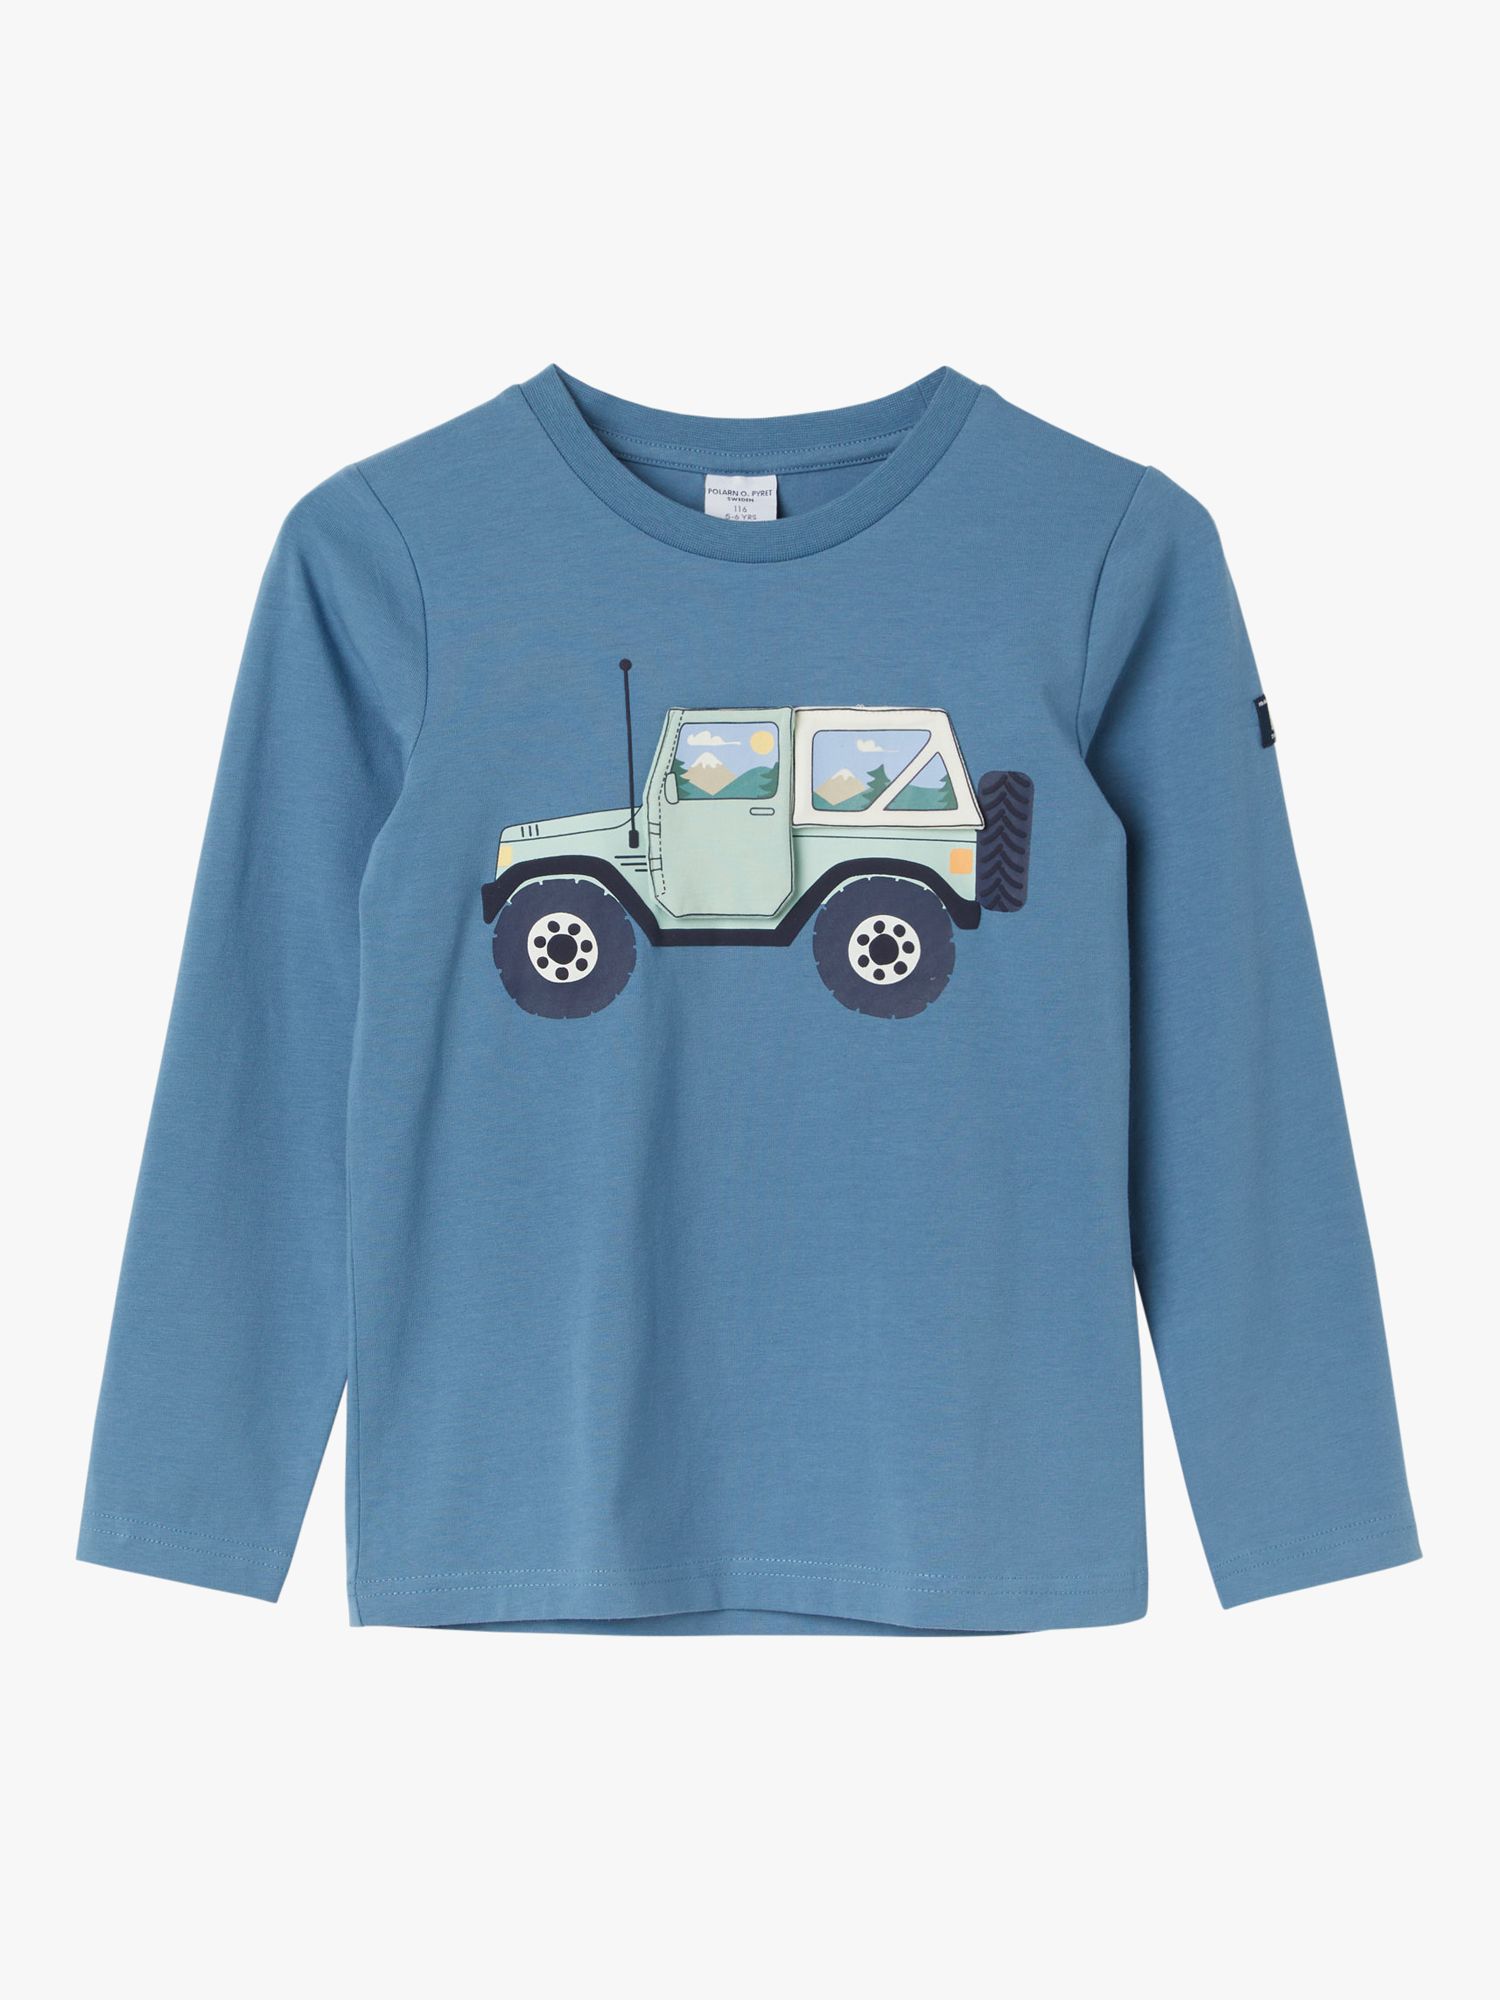 Polarn O. Pyret Kids' Organic Cotton Jeep Long Sleeve Top, Blue, 12-18 months